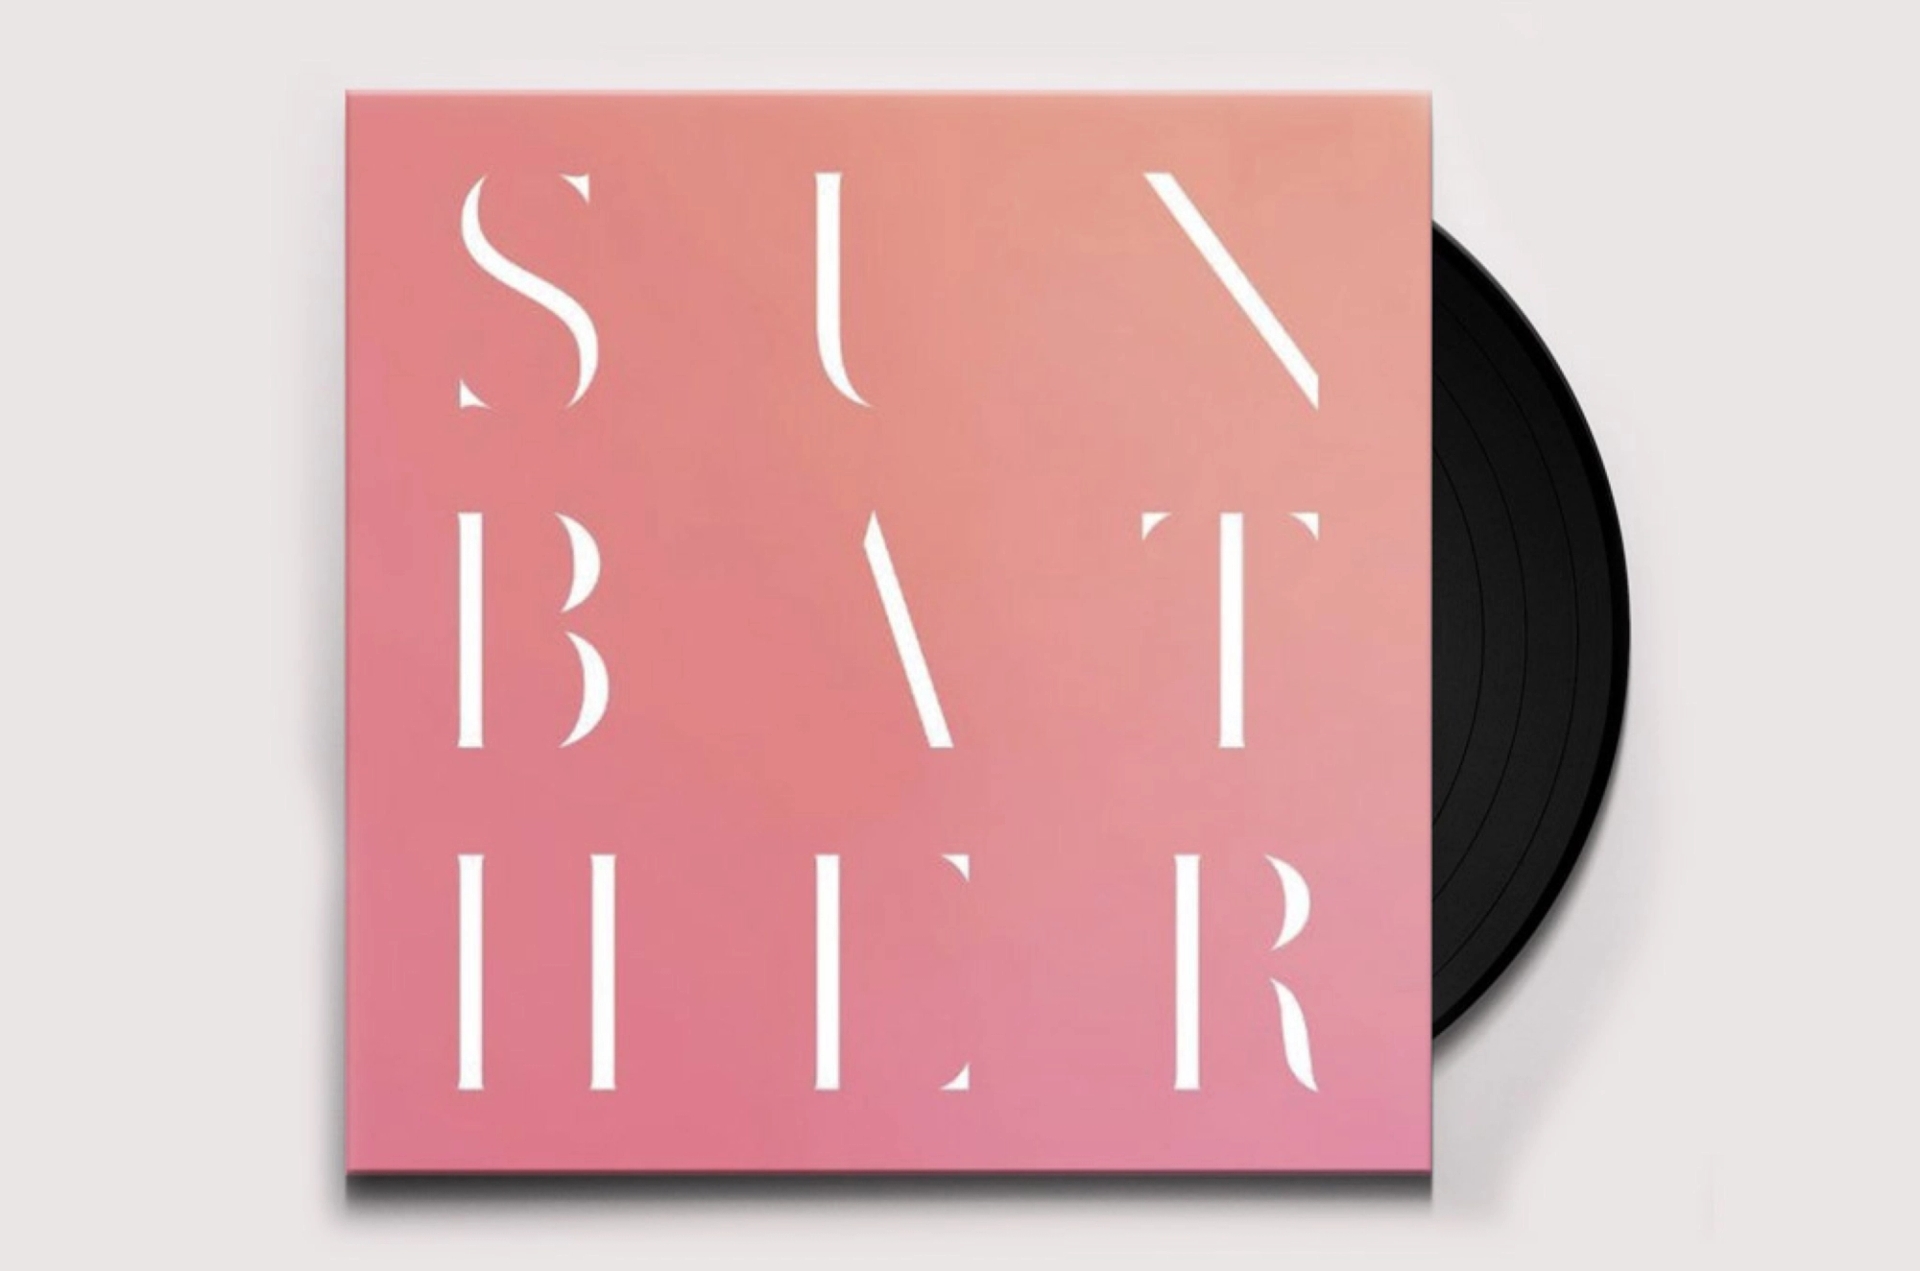 Deafheaven’s 2013 album “Sunbather” in vinyl courtesy of Kings Road Merch.